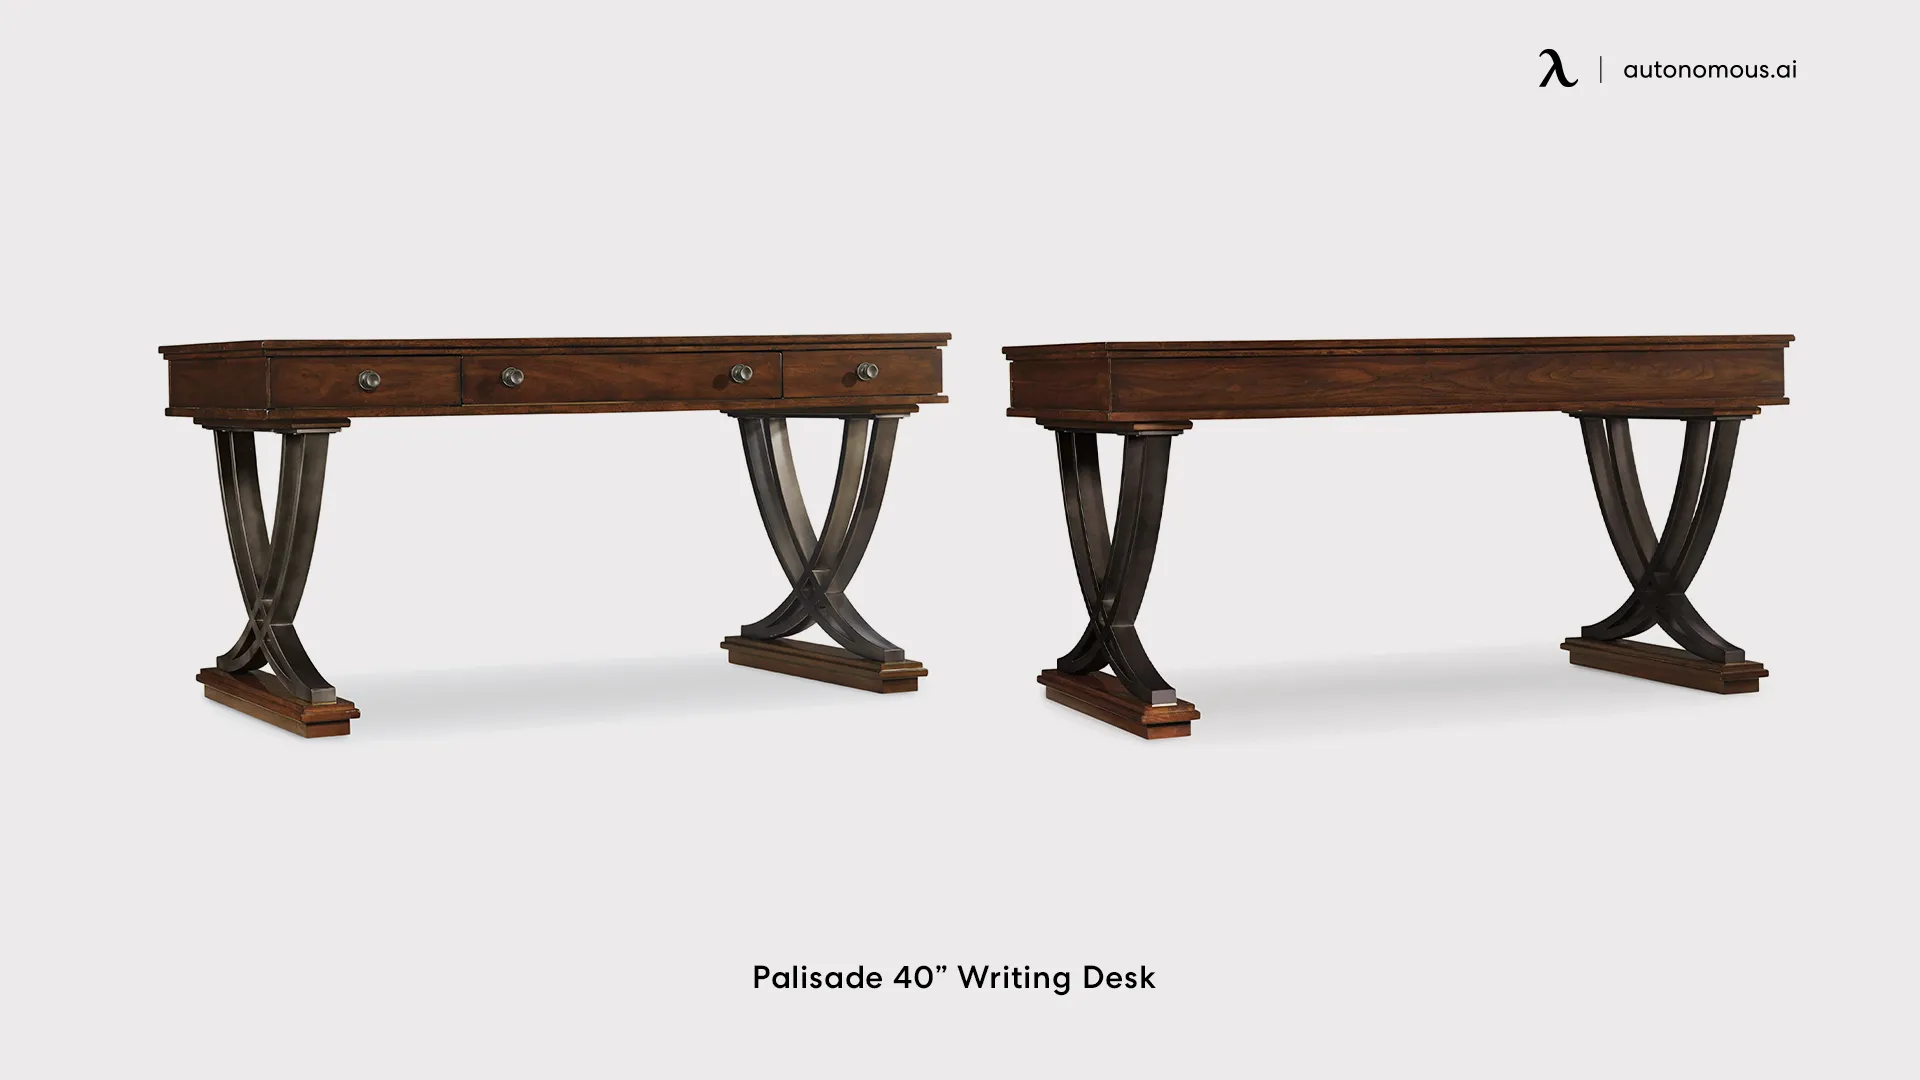 Palisade 40” Writing Desk